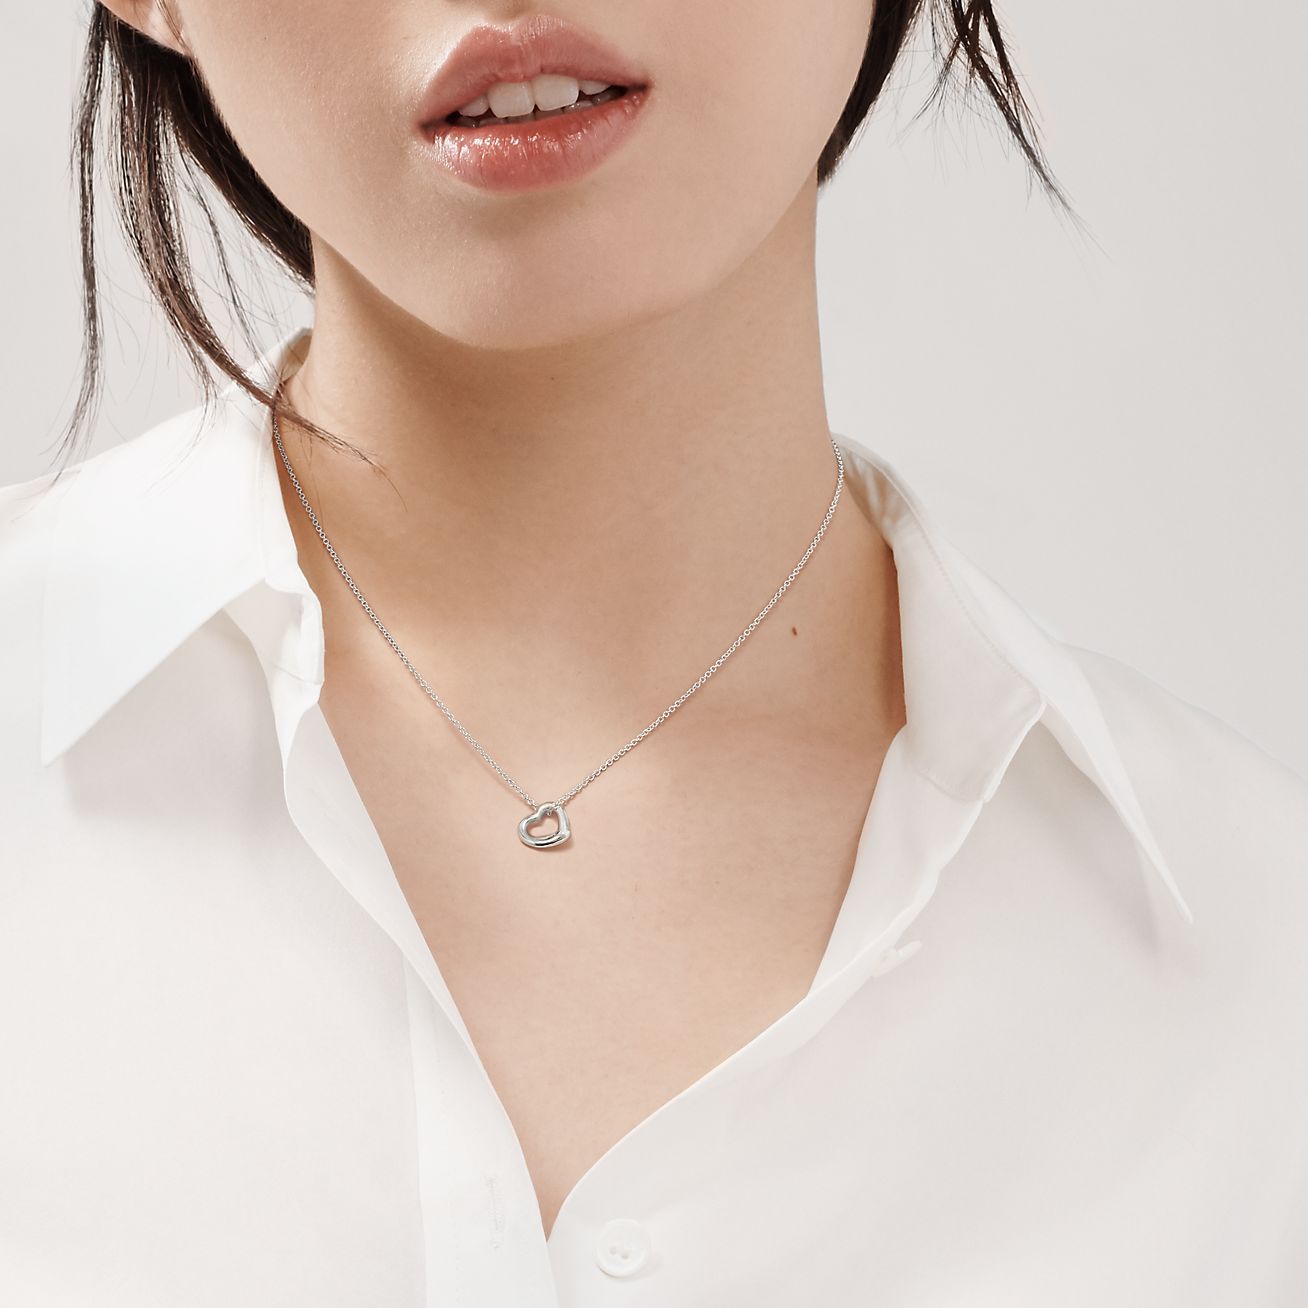 Open Heart Pendant Necklace Chain Bracelet Womens Ladies Gift Fashion jewellery 